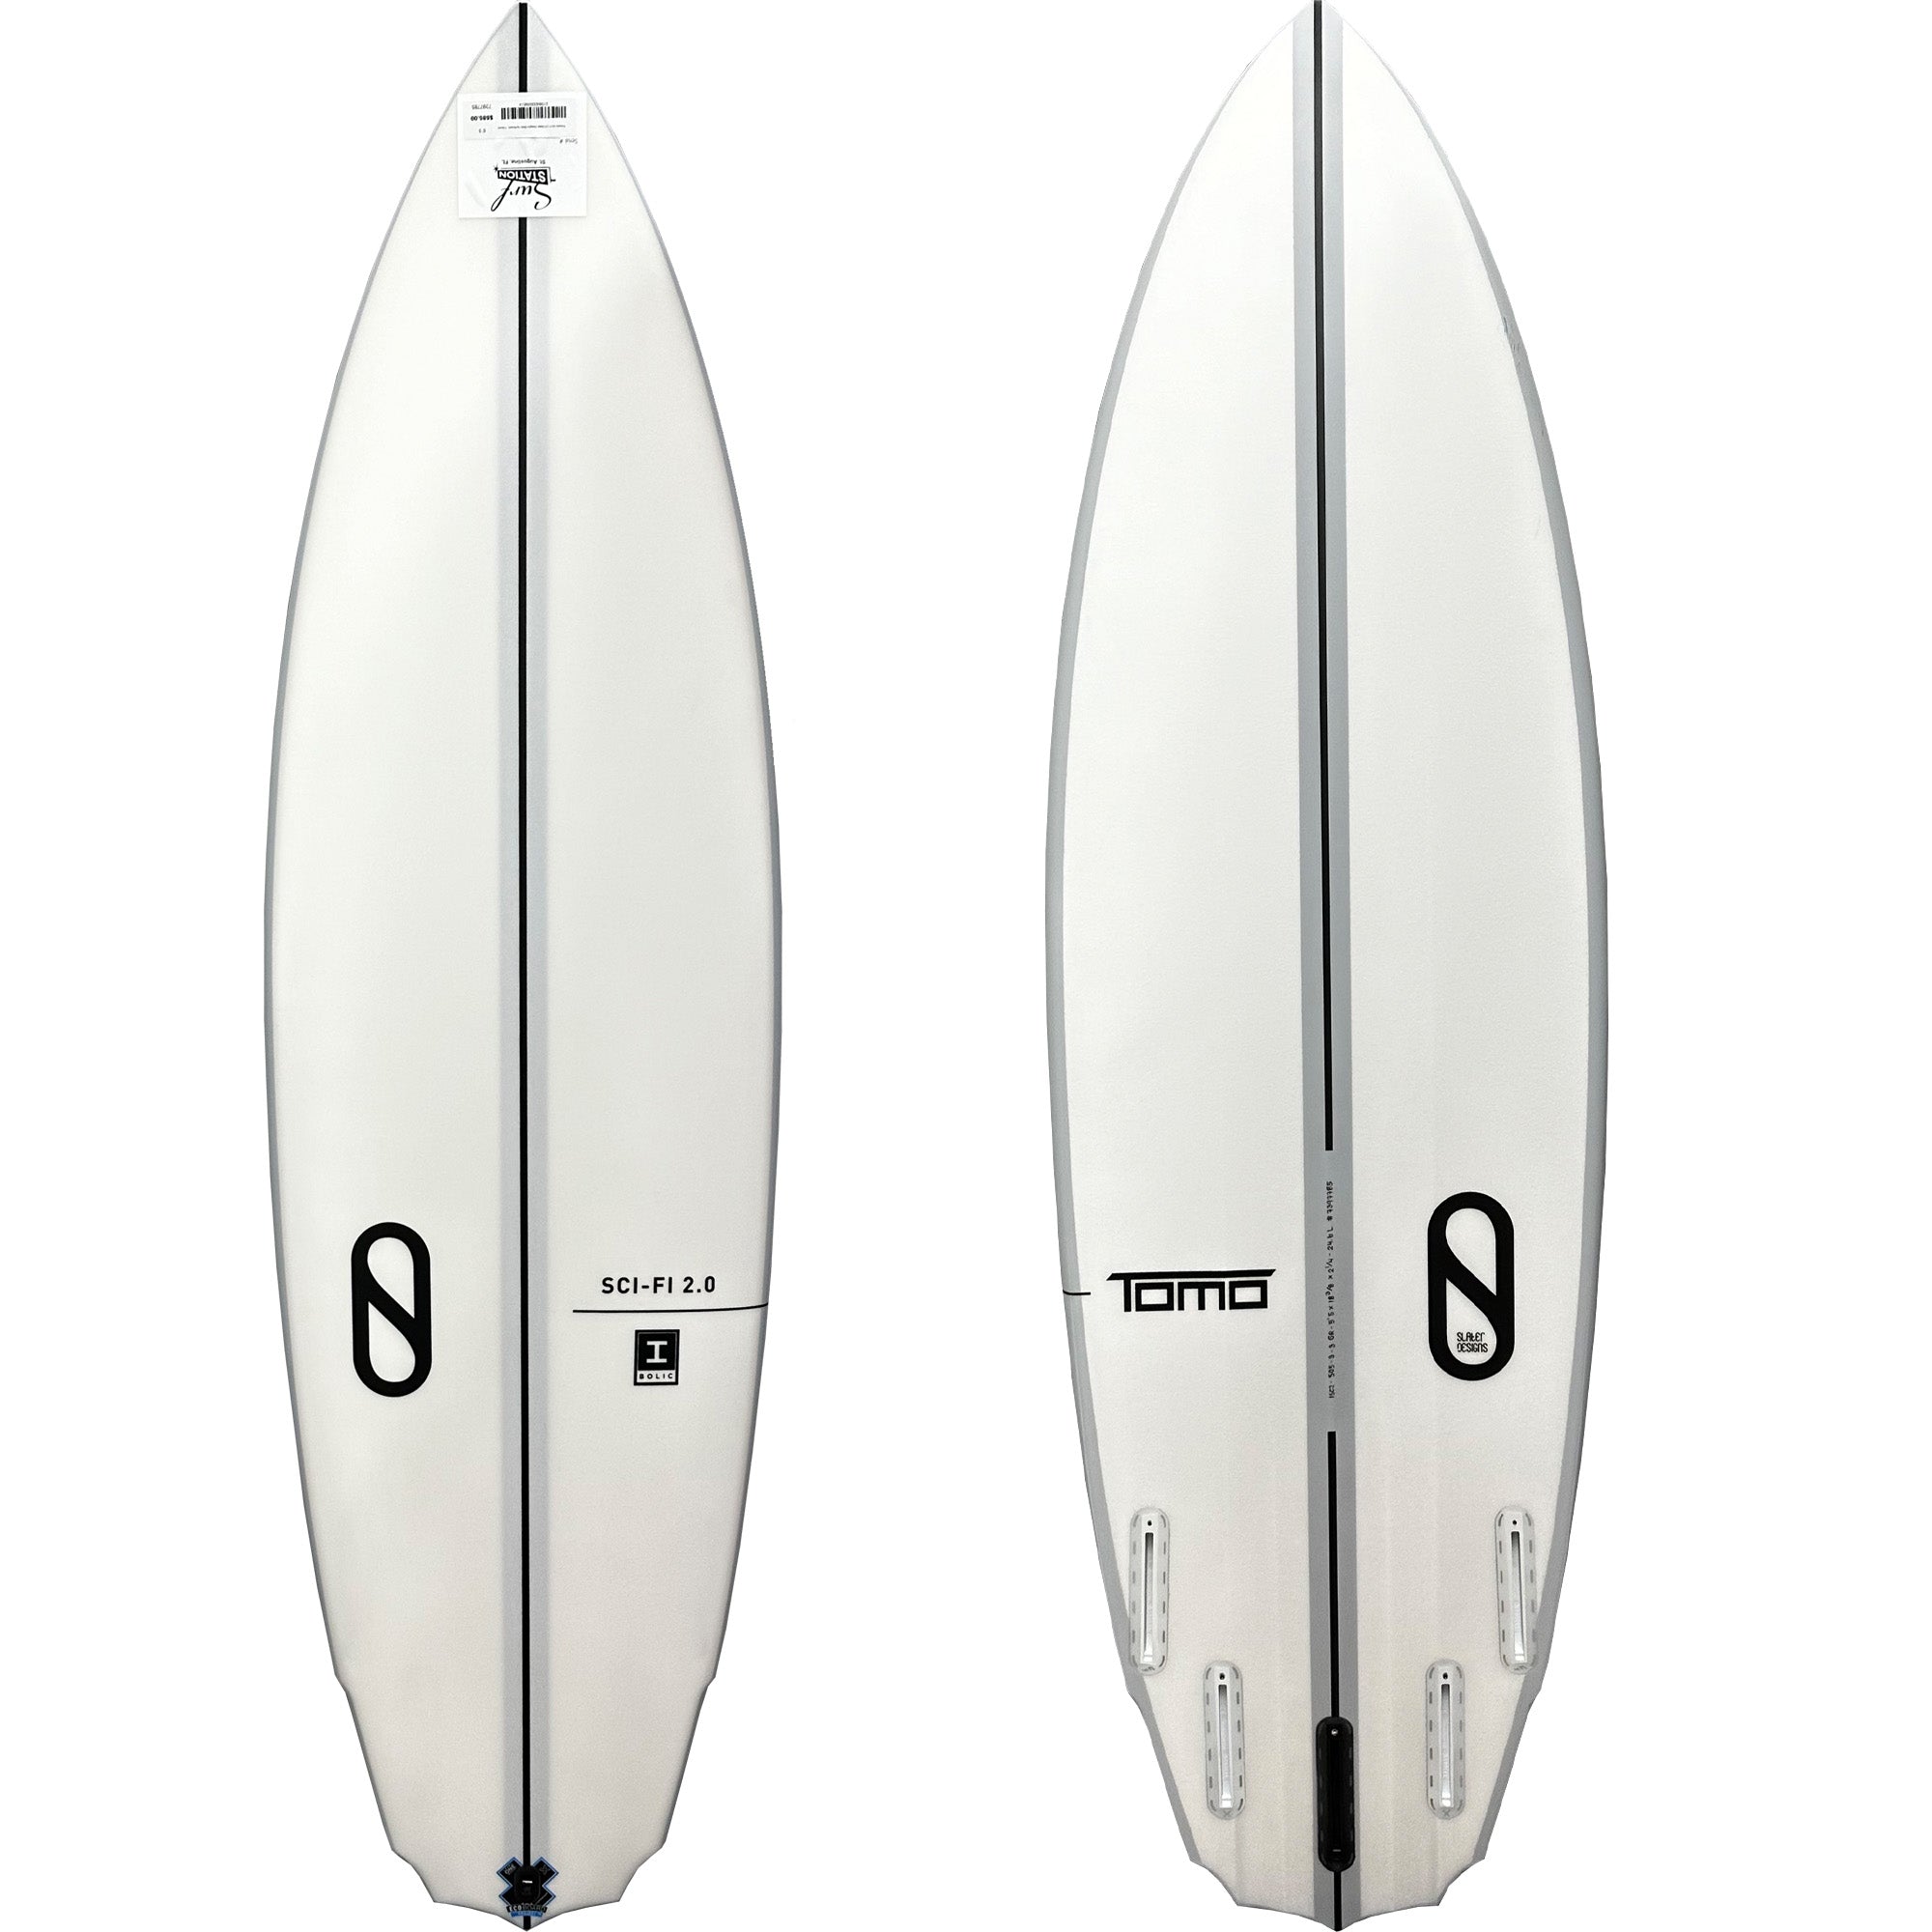 Firewire Sci-Fi 2.0 Slater Designs IBolic Surfboard - Futures